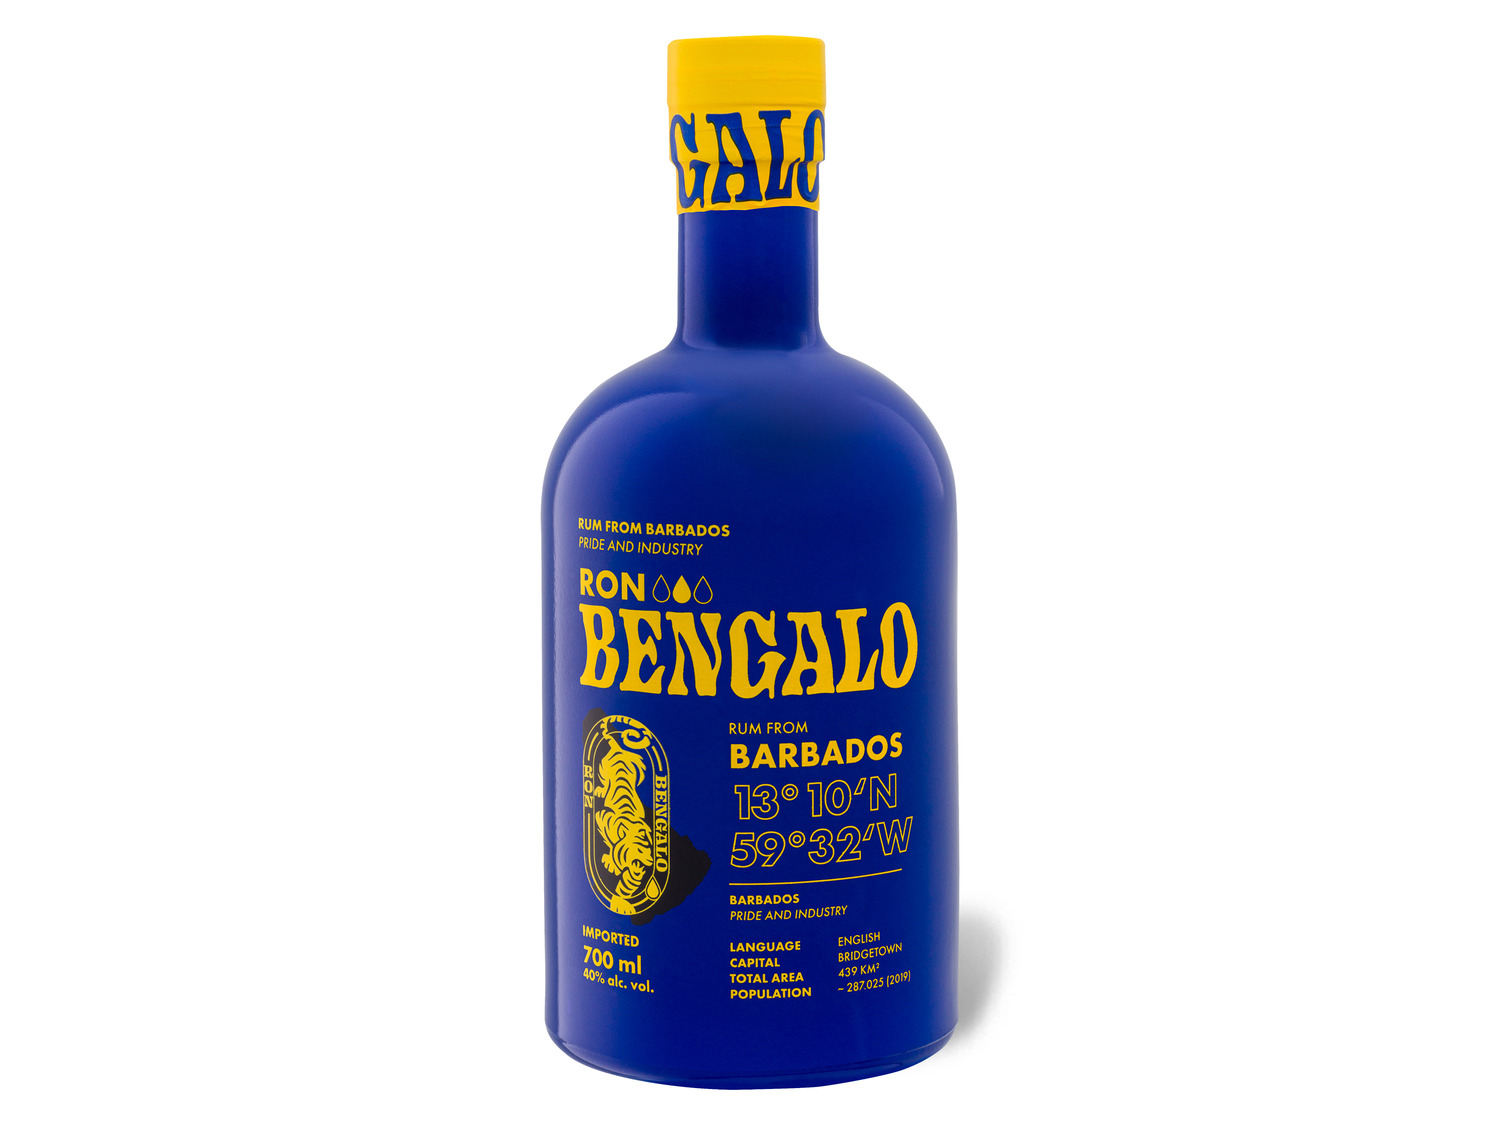 Ron Bengalo Barbados Rum 40% Vol online kaufen | LIDL